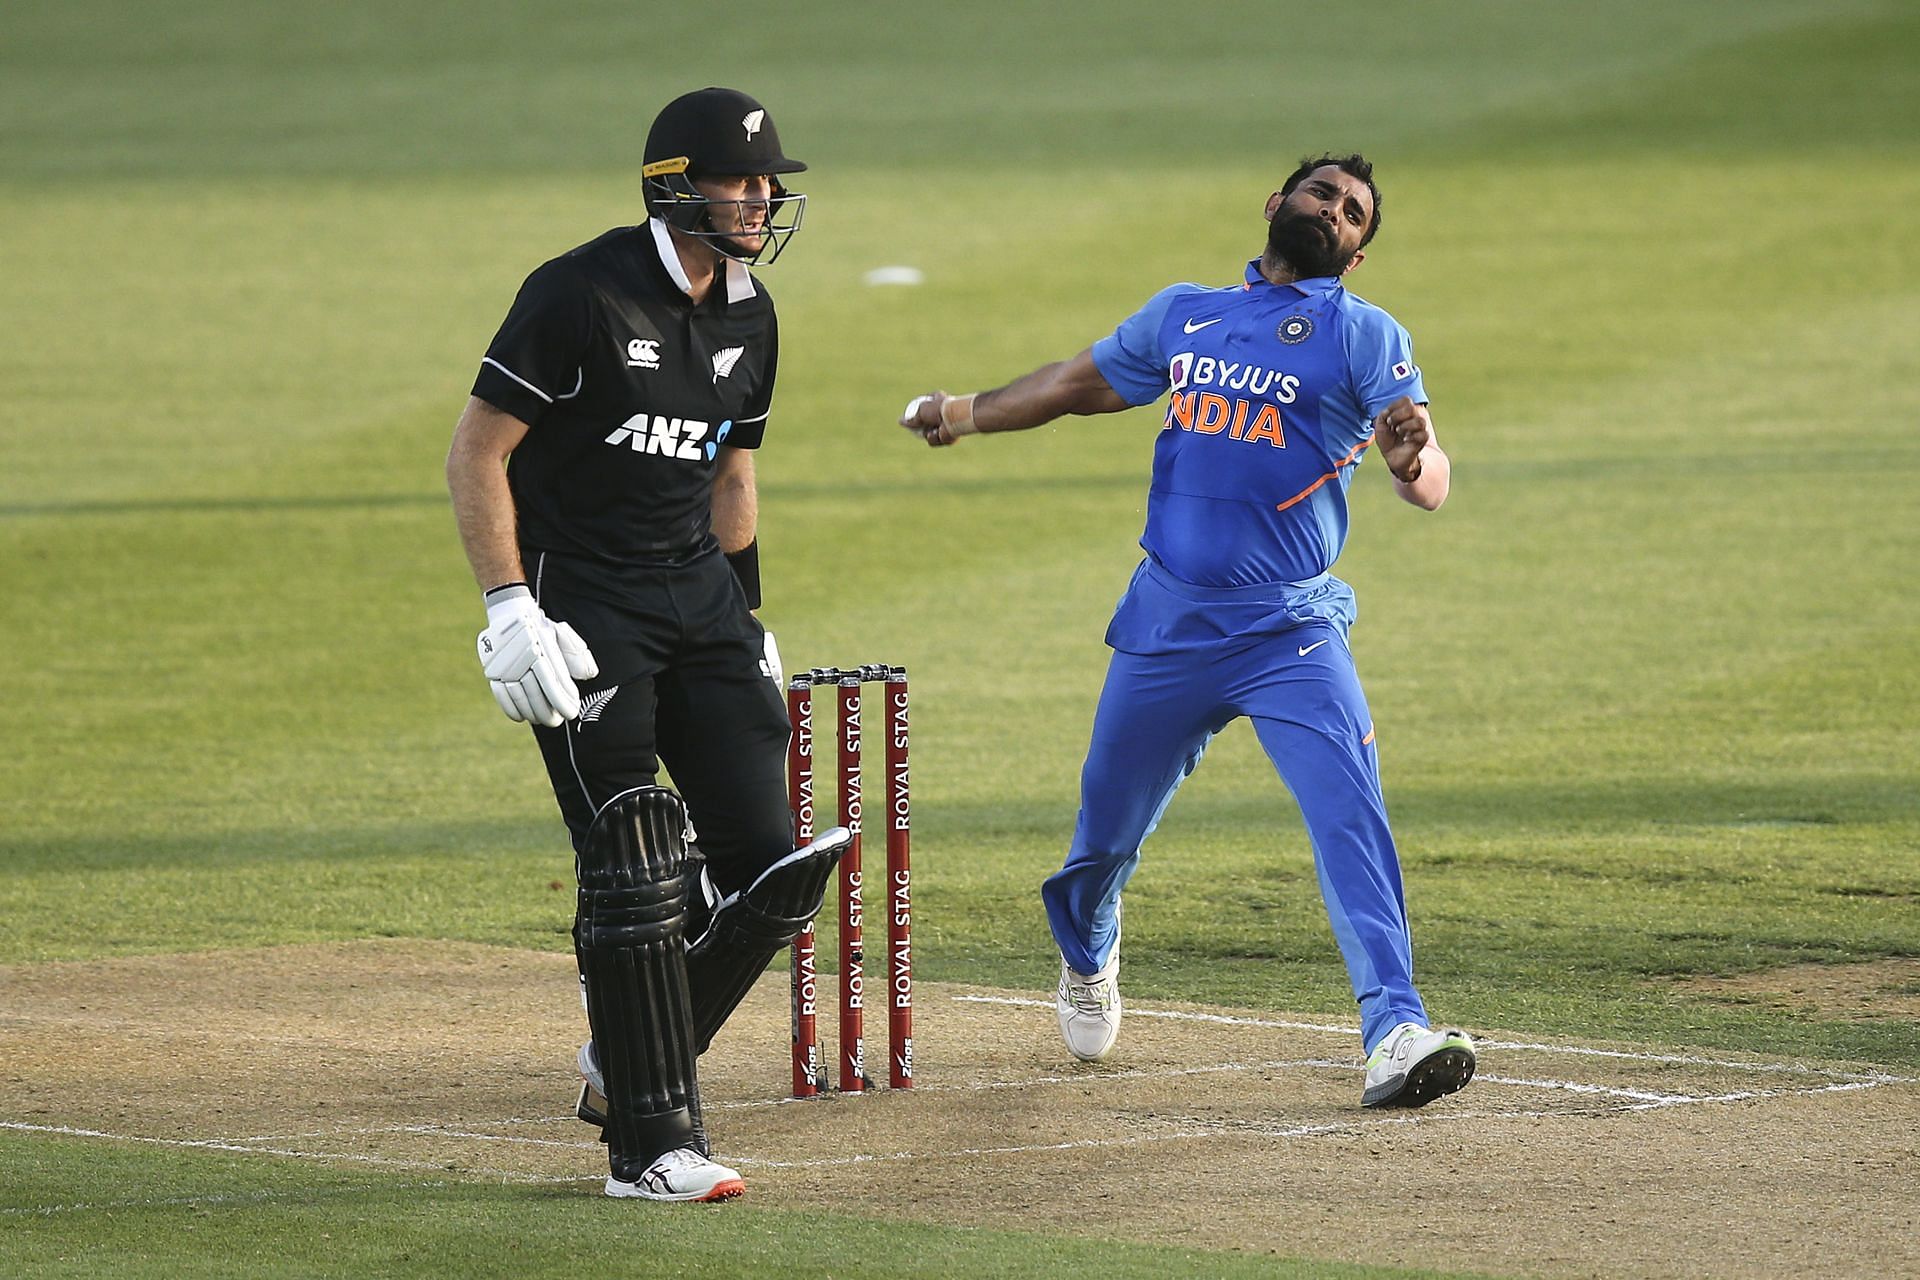 New Zealand vs India - ODI: Game 1 (Image: Getty)